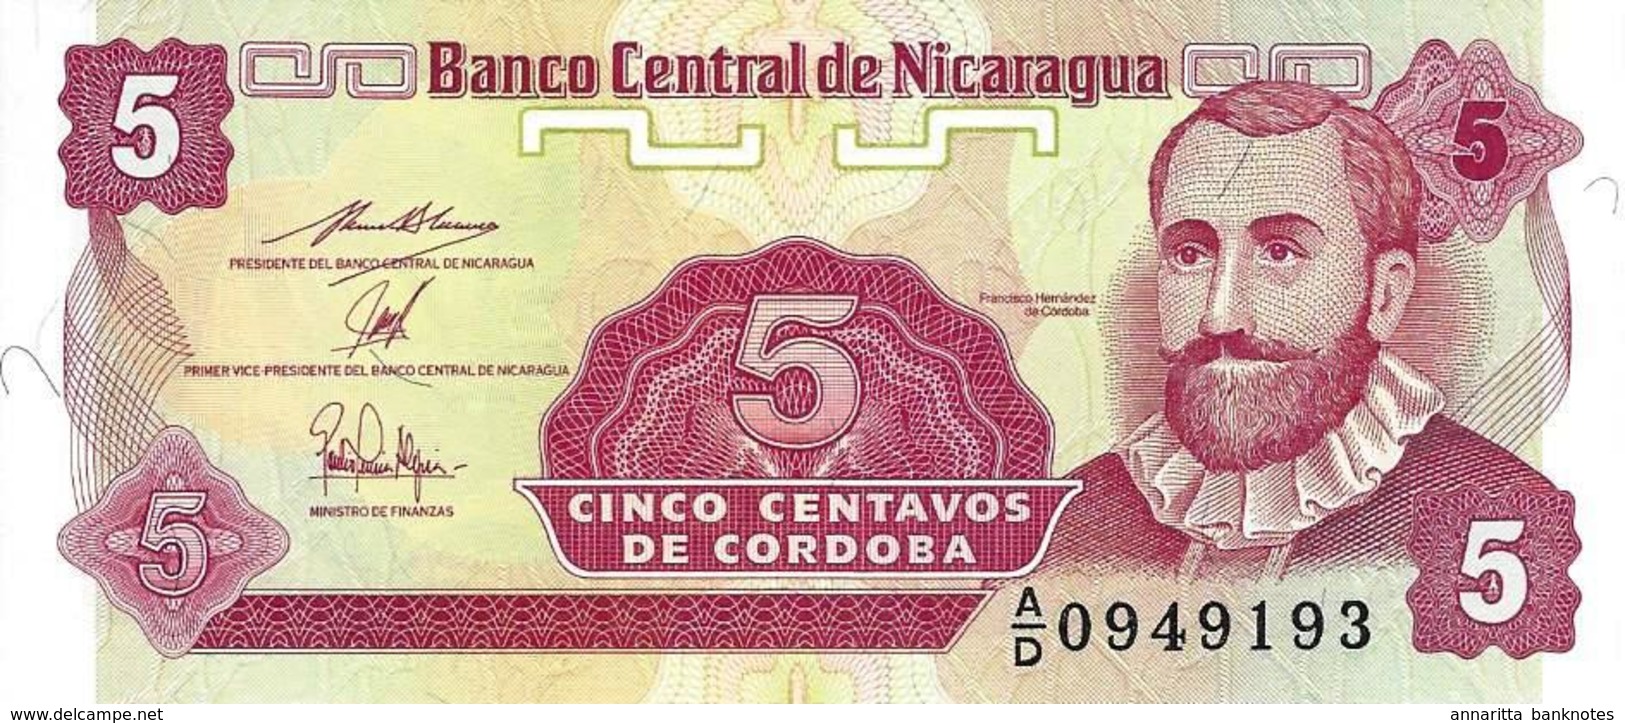 NICARAGUA 5 CENTAVOS ND (1990) P-168 UNC PREFIX A/D [NI462b] - Nicaragua